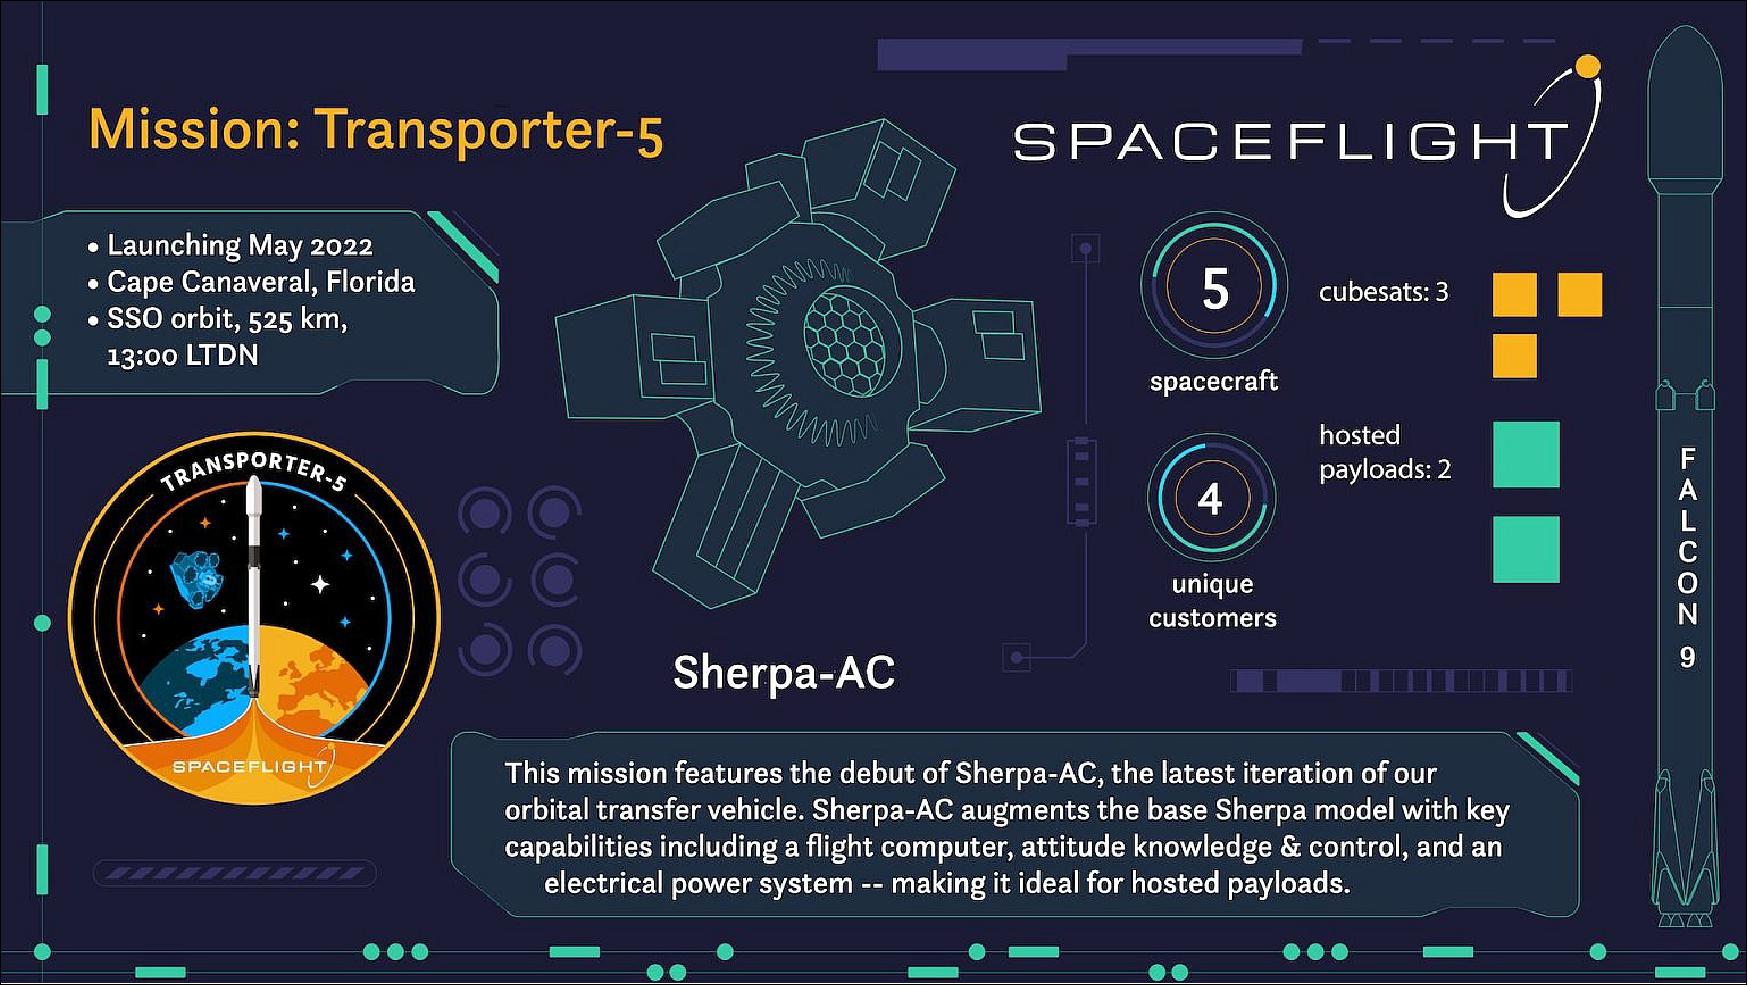 Figure 2: Presentation of Spaceflight payloads on the Transporter-5 mission (image credit: Spaceflight)